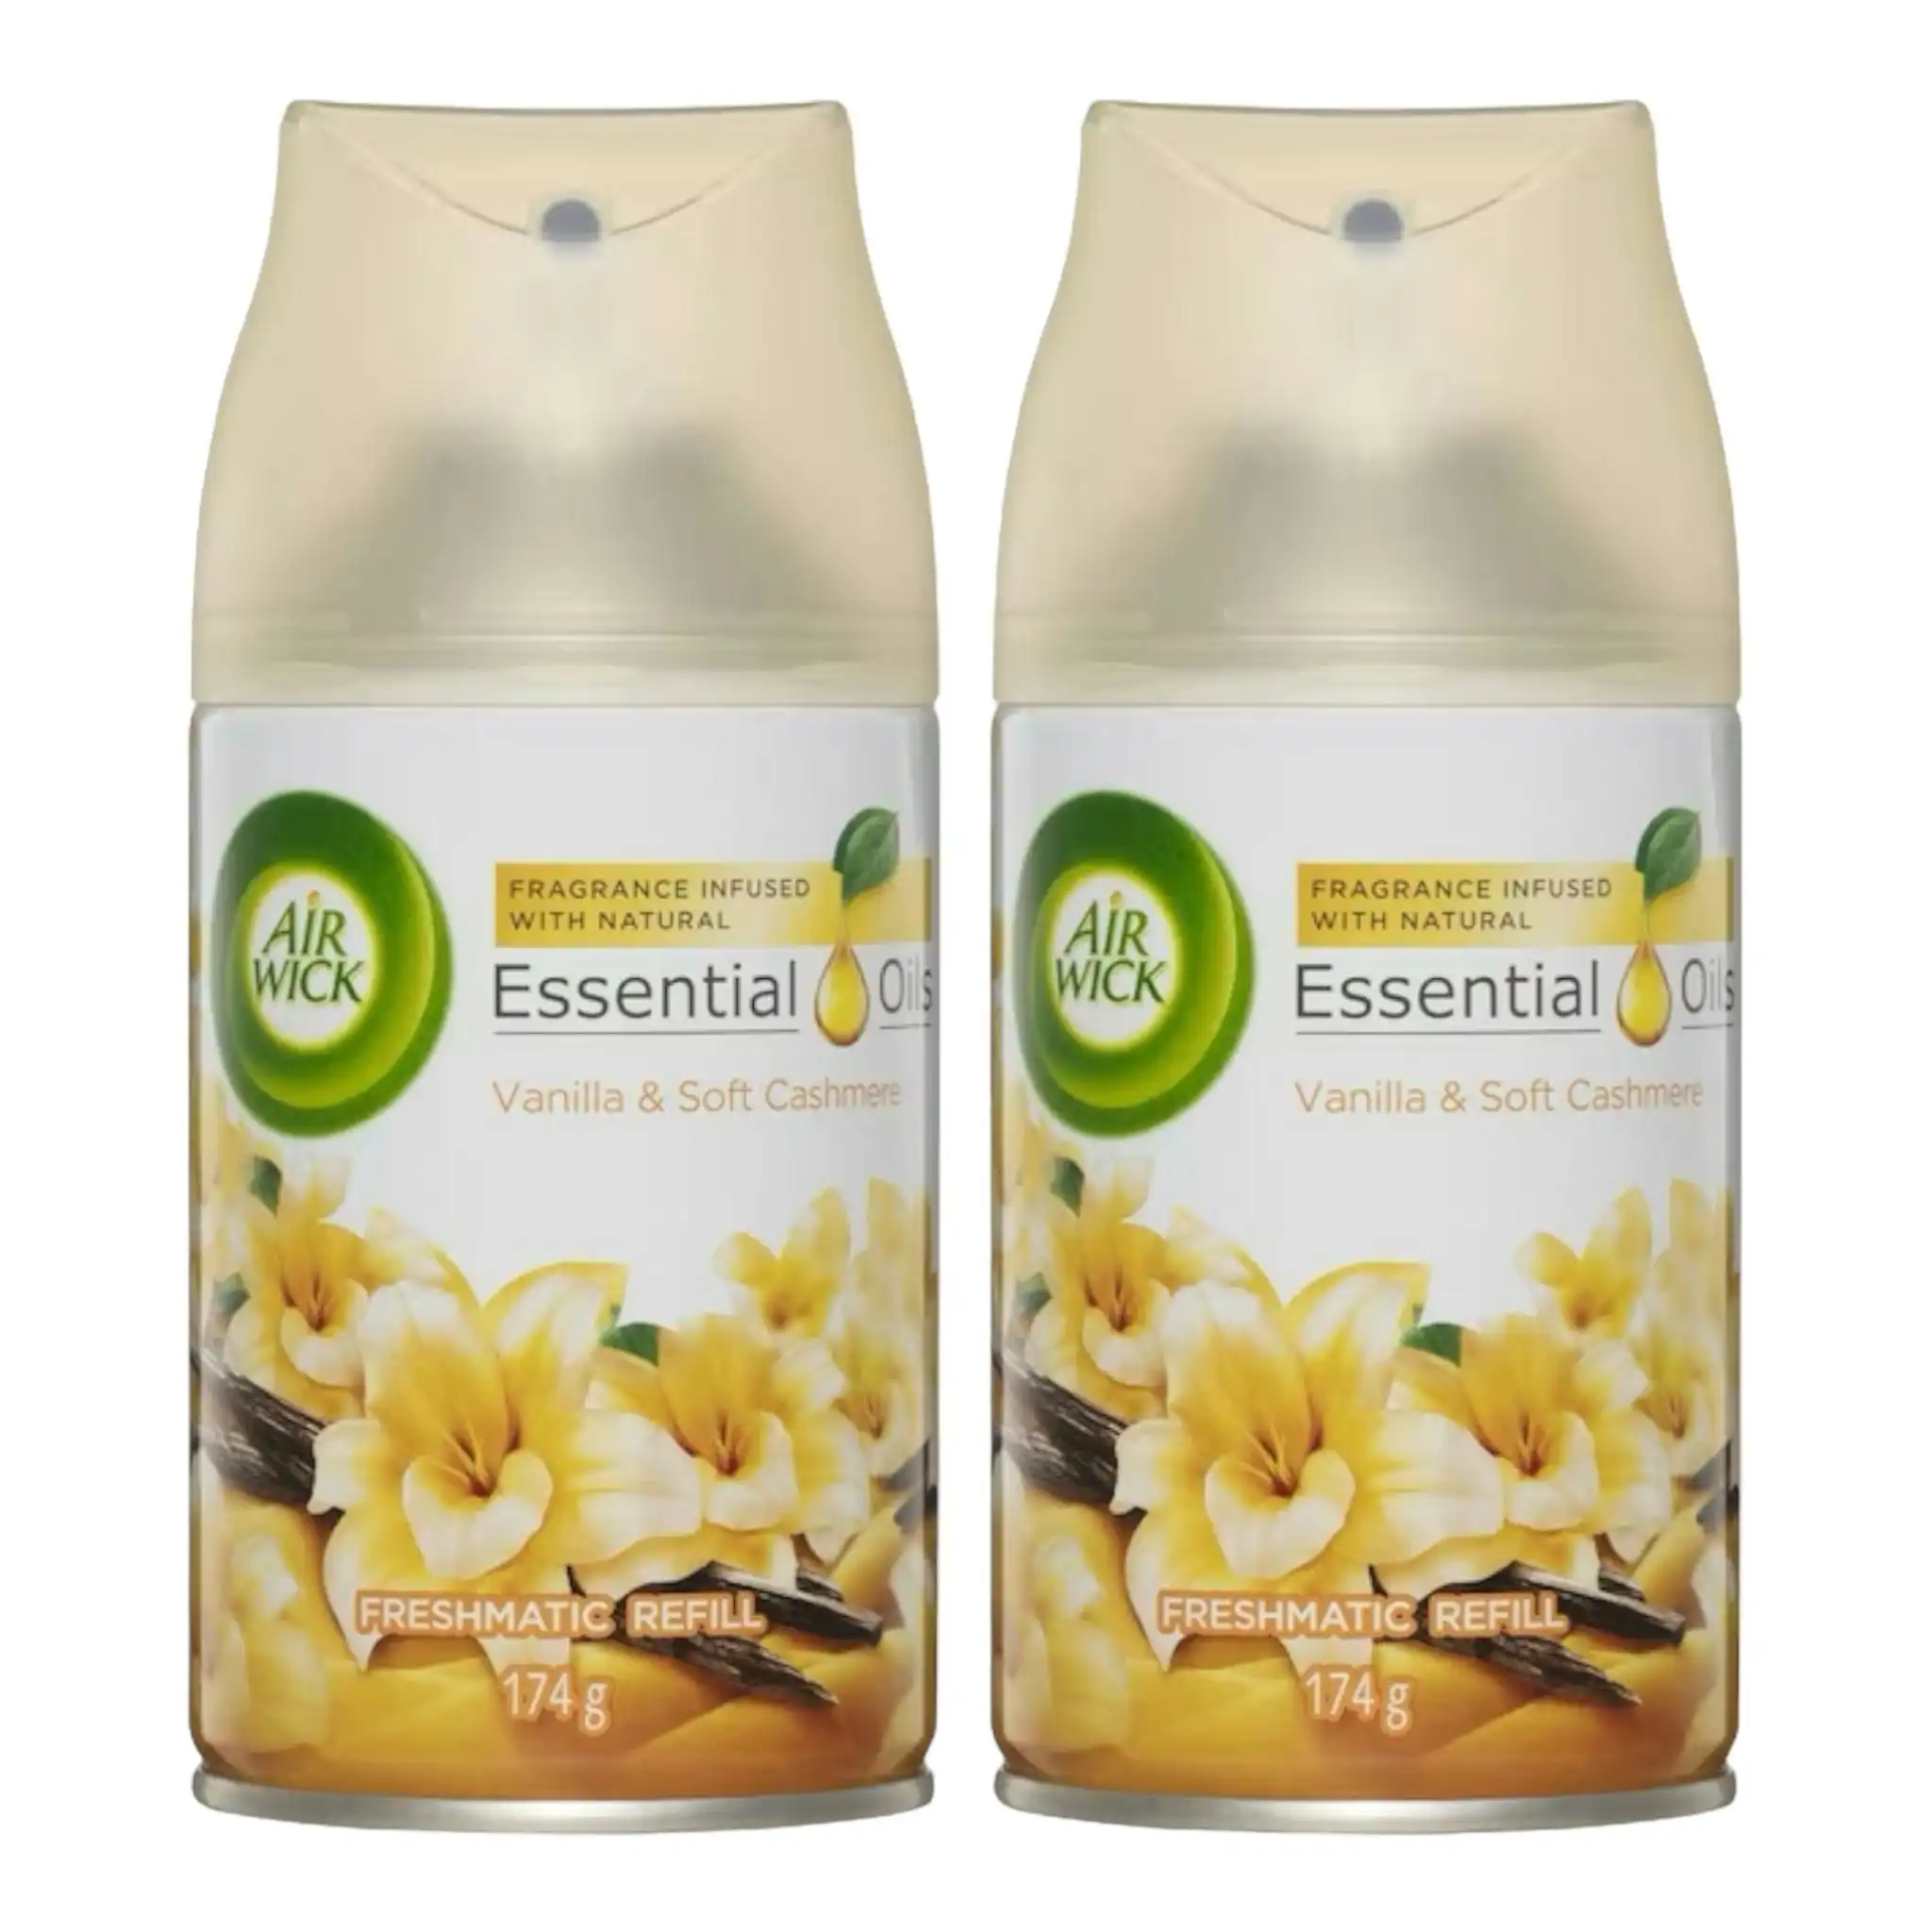 2 Pack Airwick Essential Oil Freshmatic Refill Vanilla & Soft Cashmere 174g